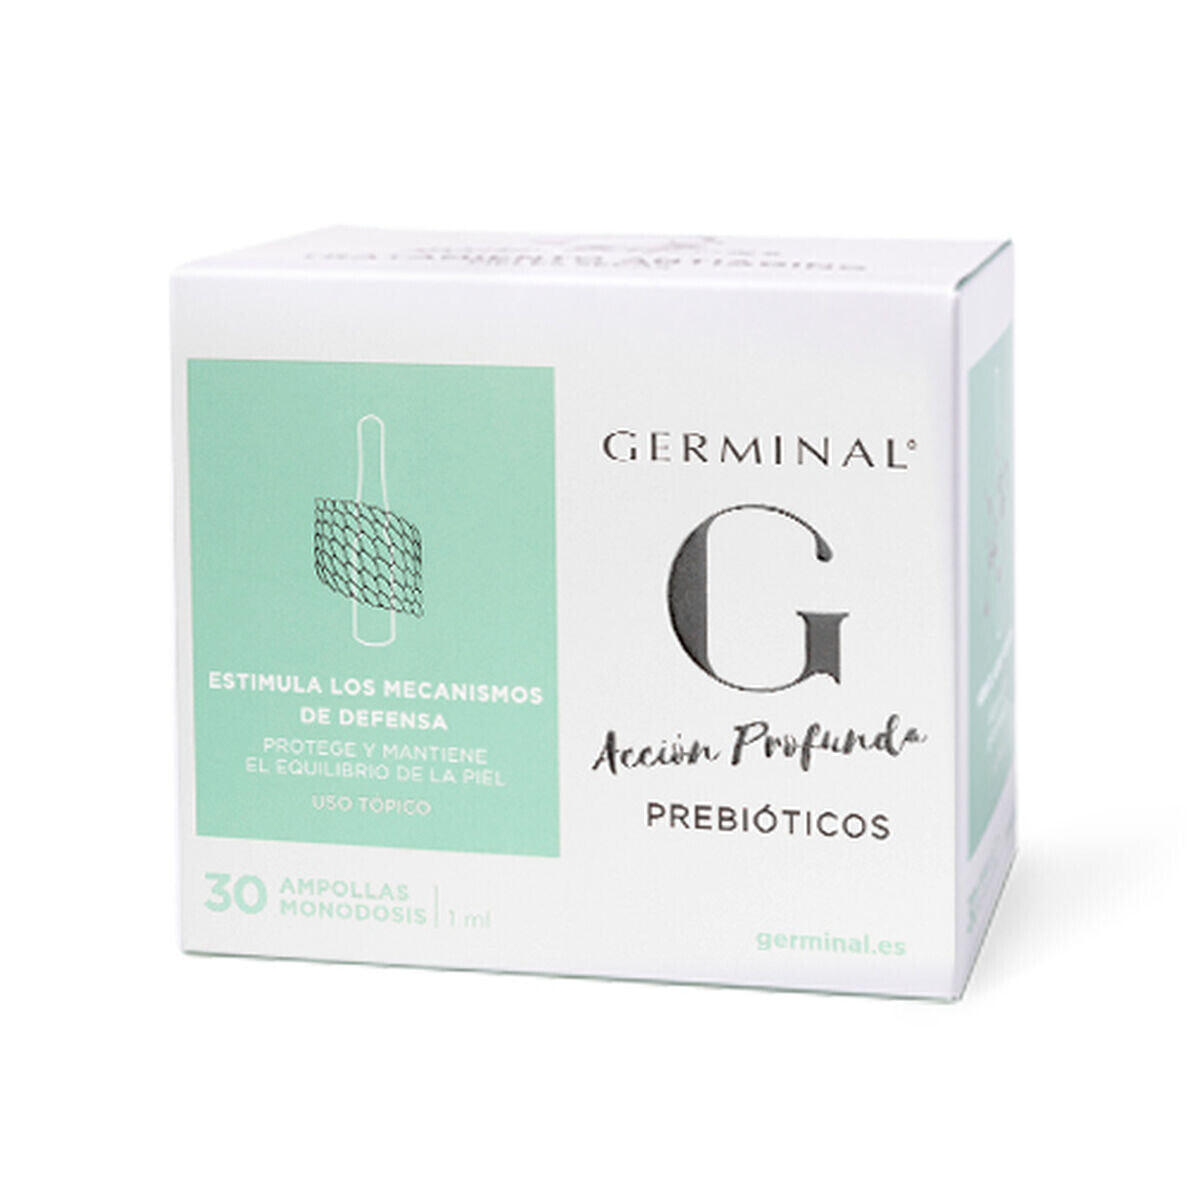 Антивозрастные капсулы Germinal Acción Profunda Ампулы x 30 Prebioticos 1 ml